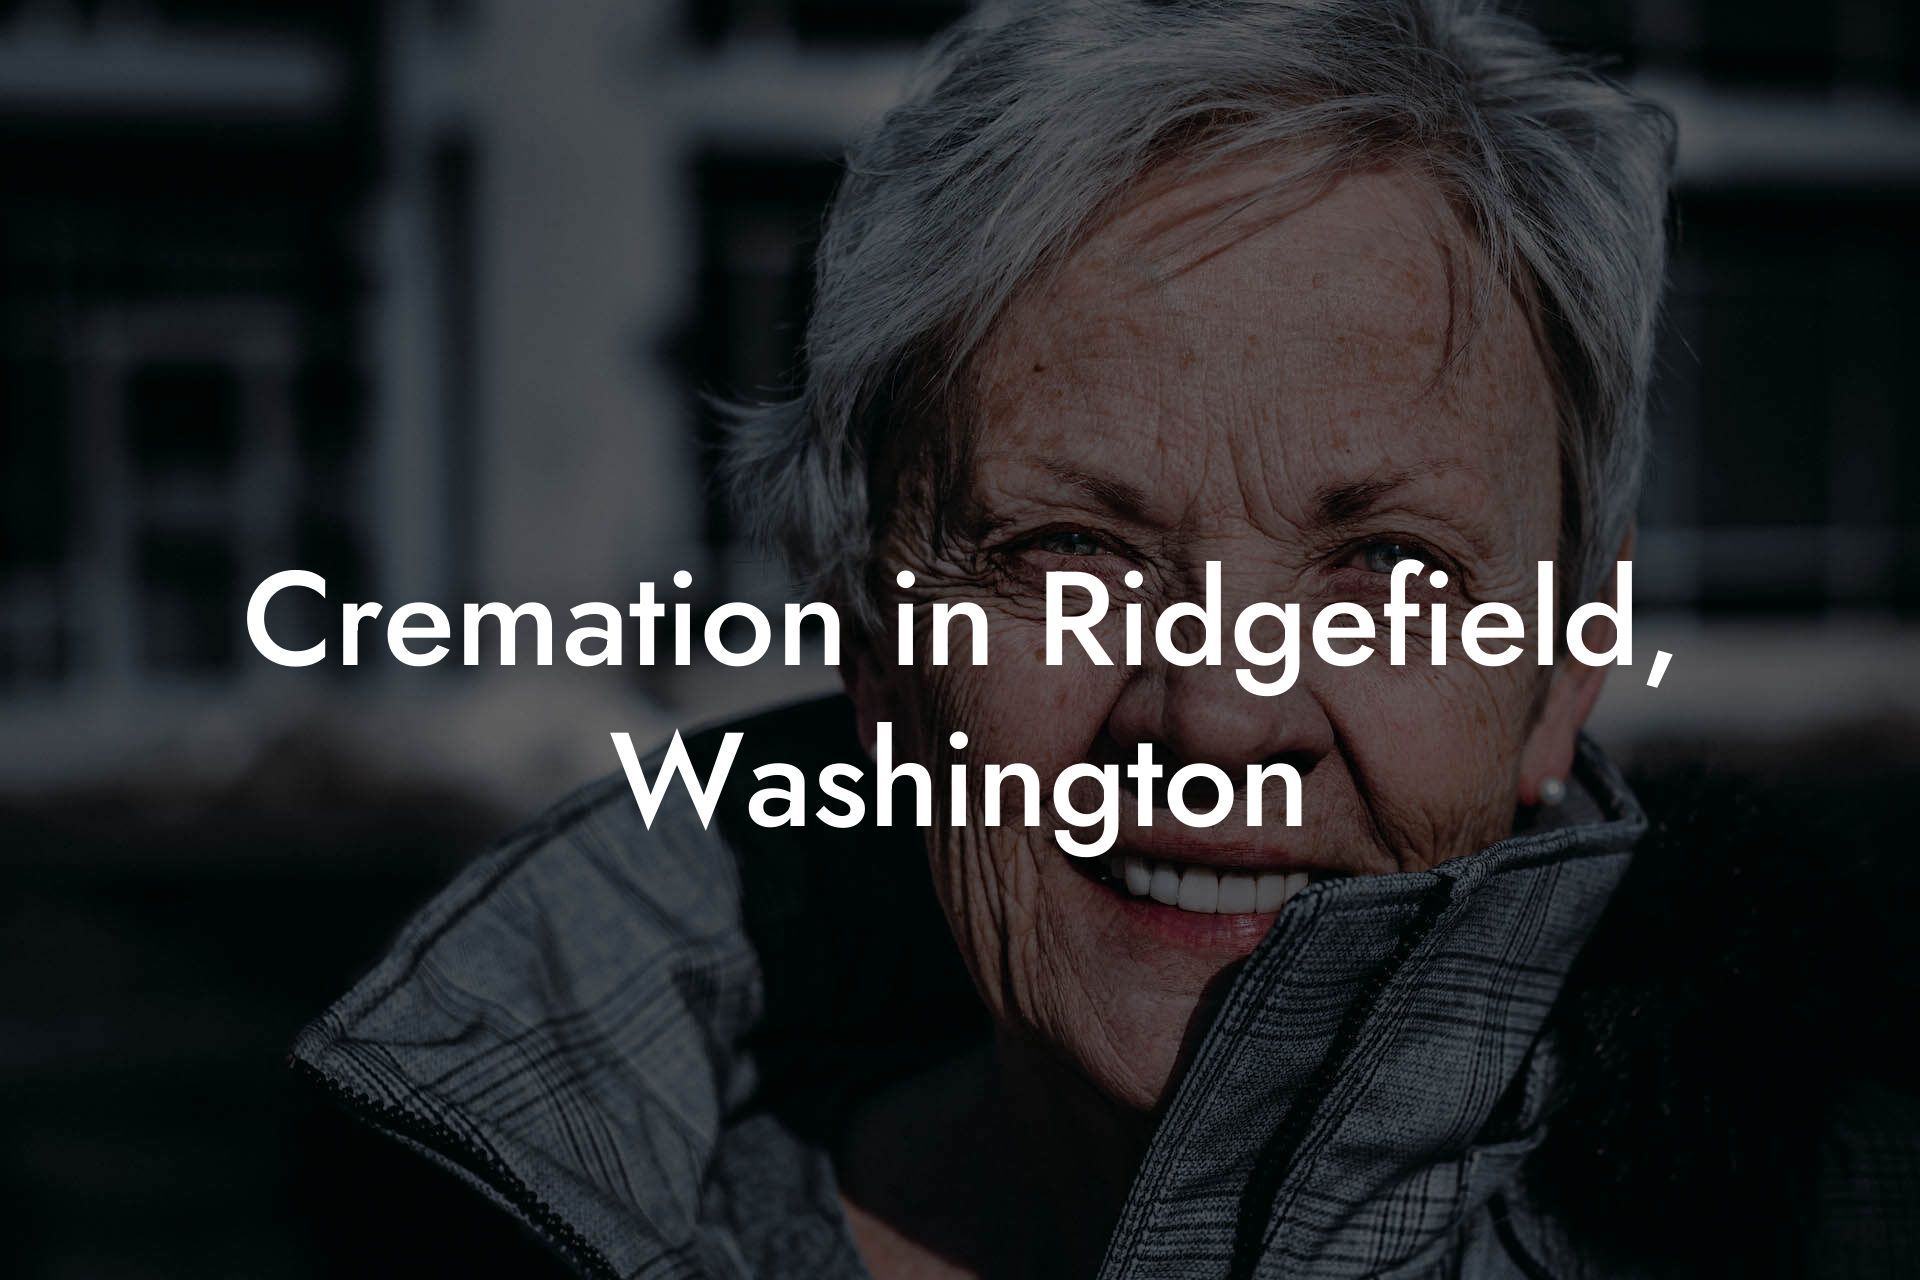 Cremation in Ridgefield, Washington